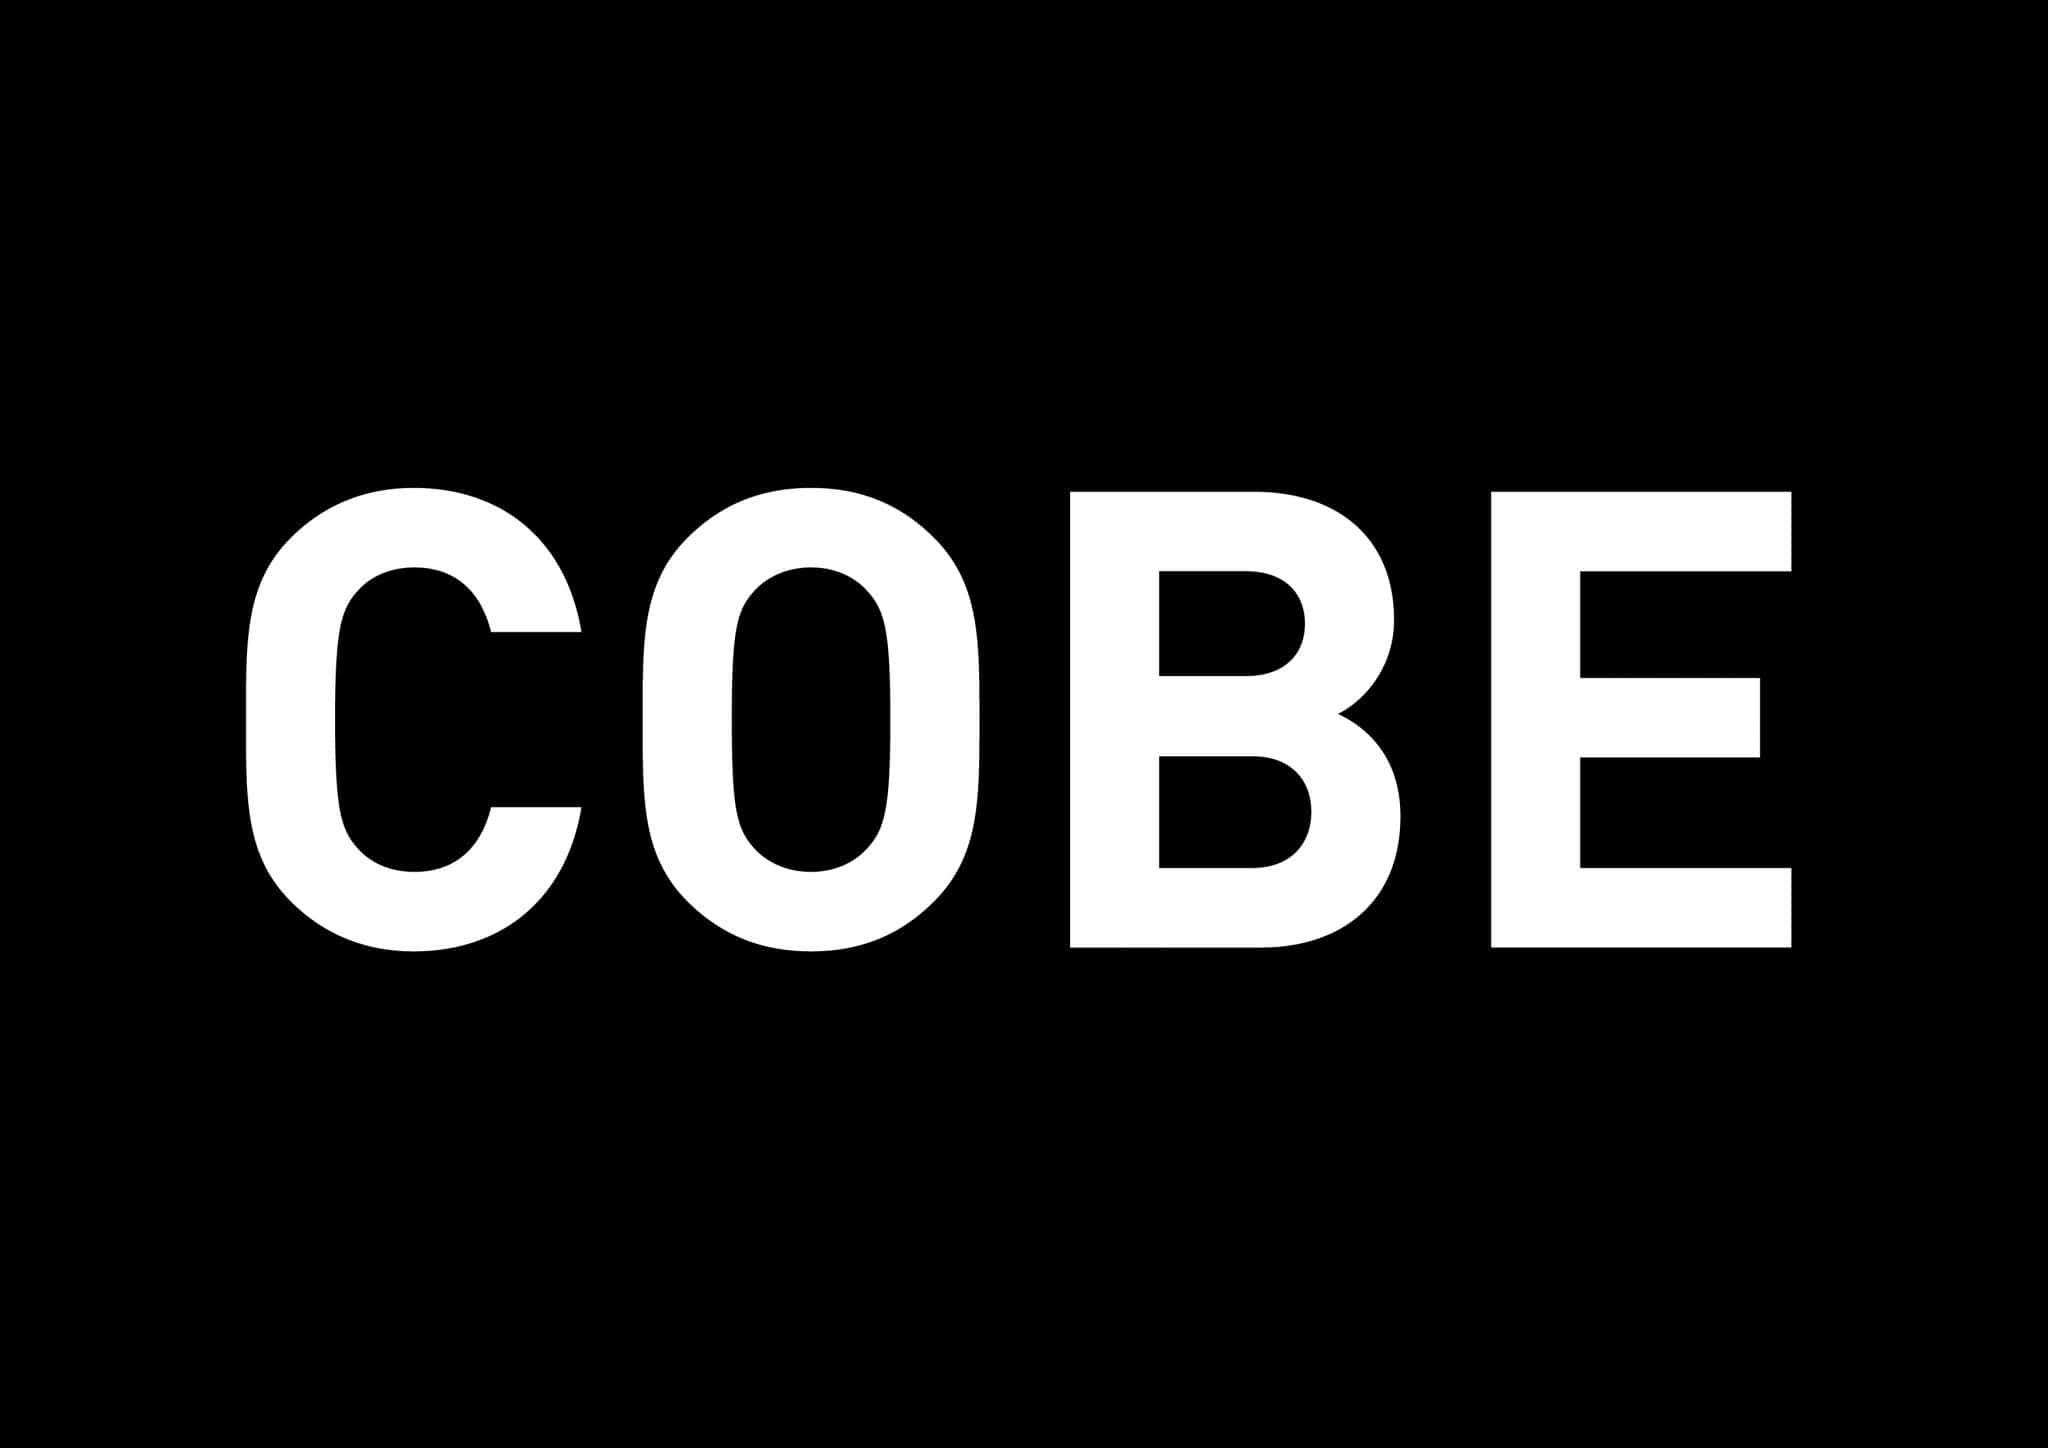 0 brought. Cobe1369. Cobe.